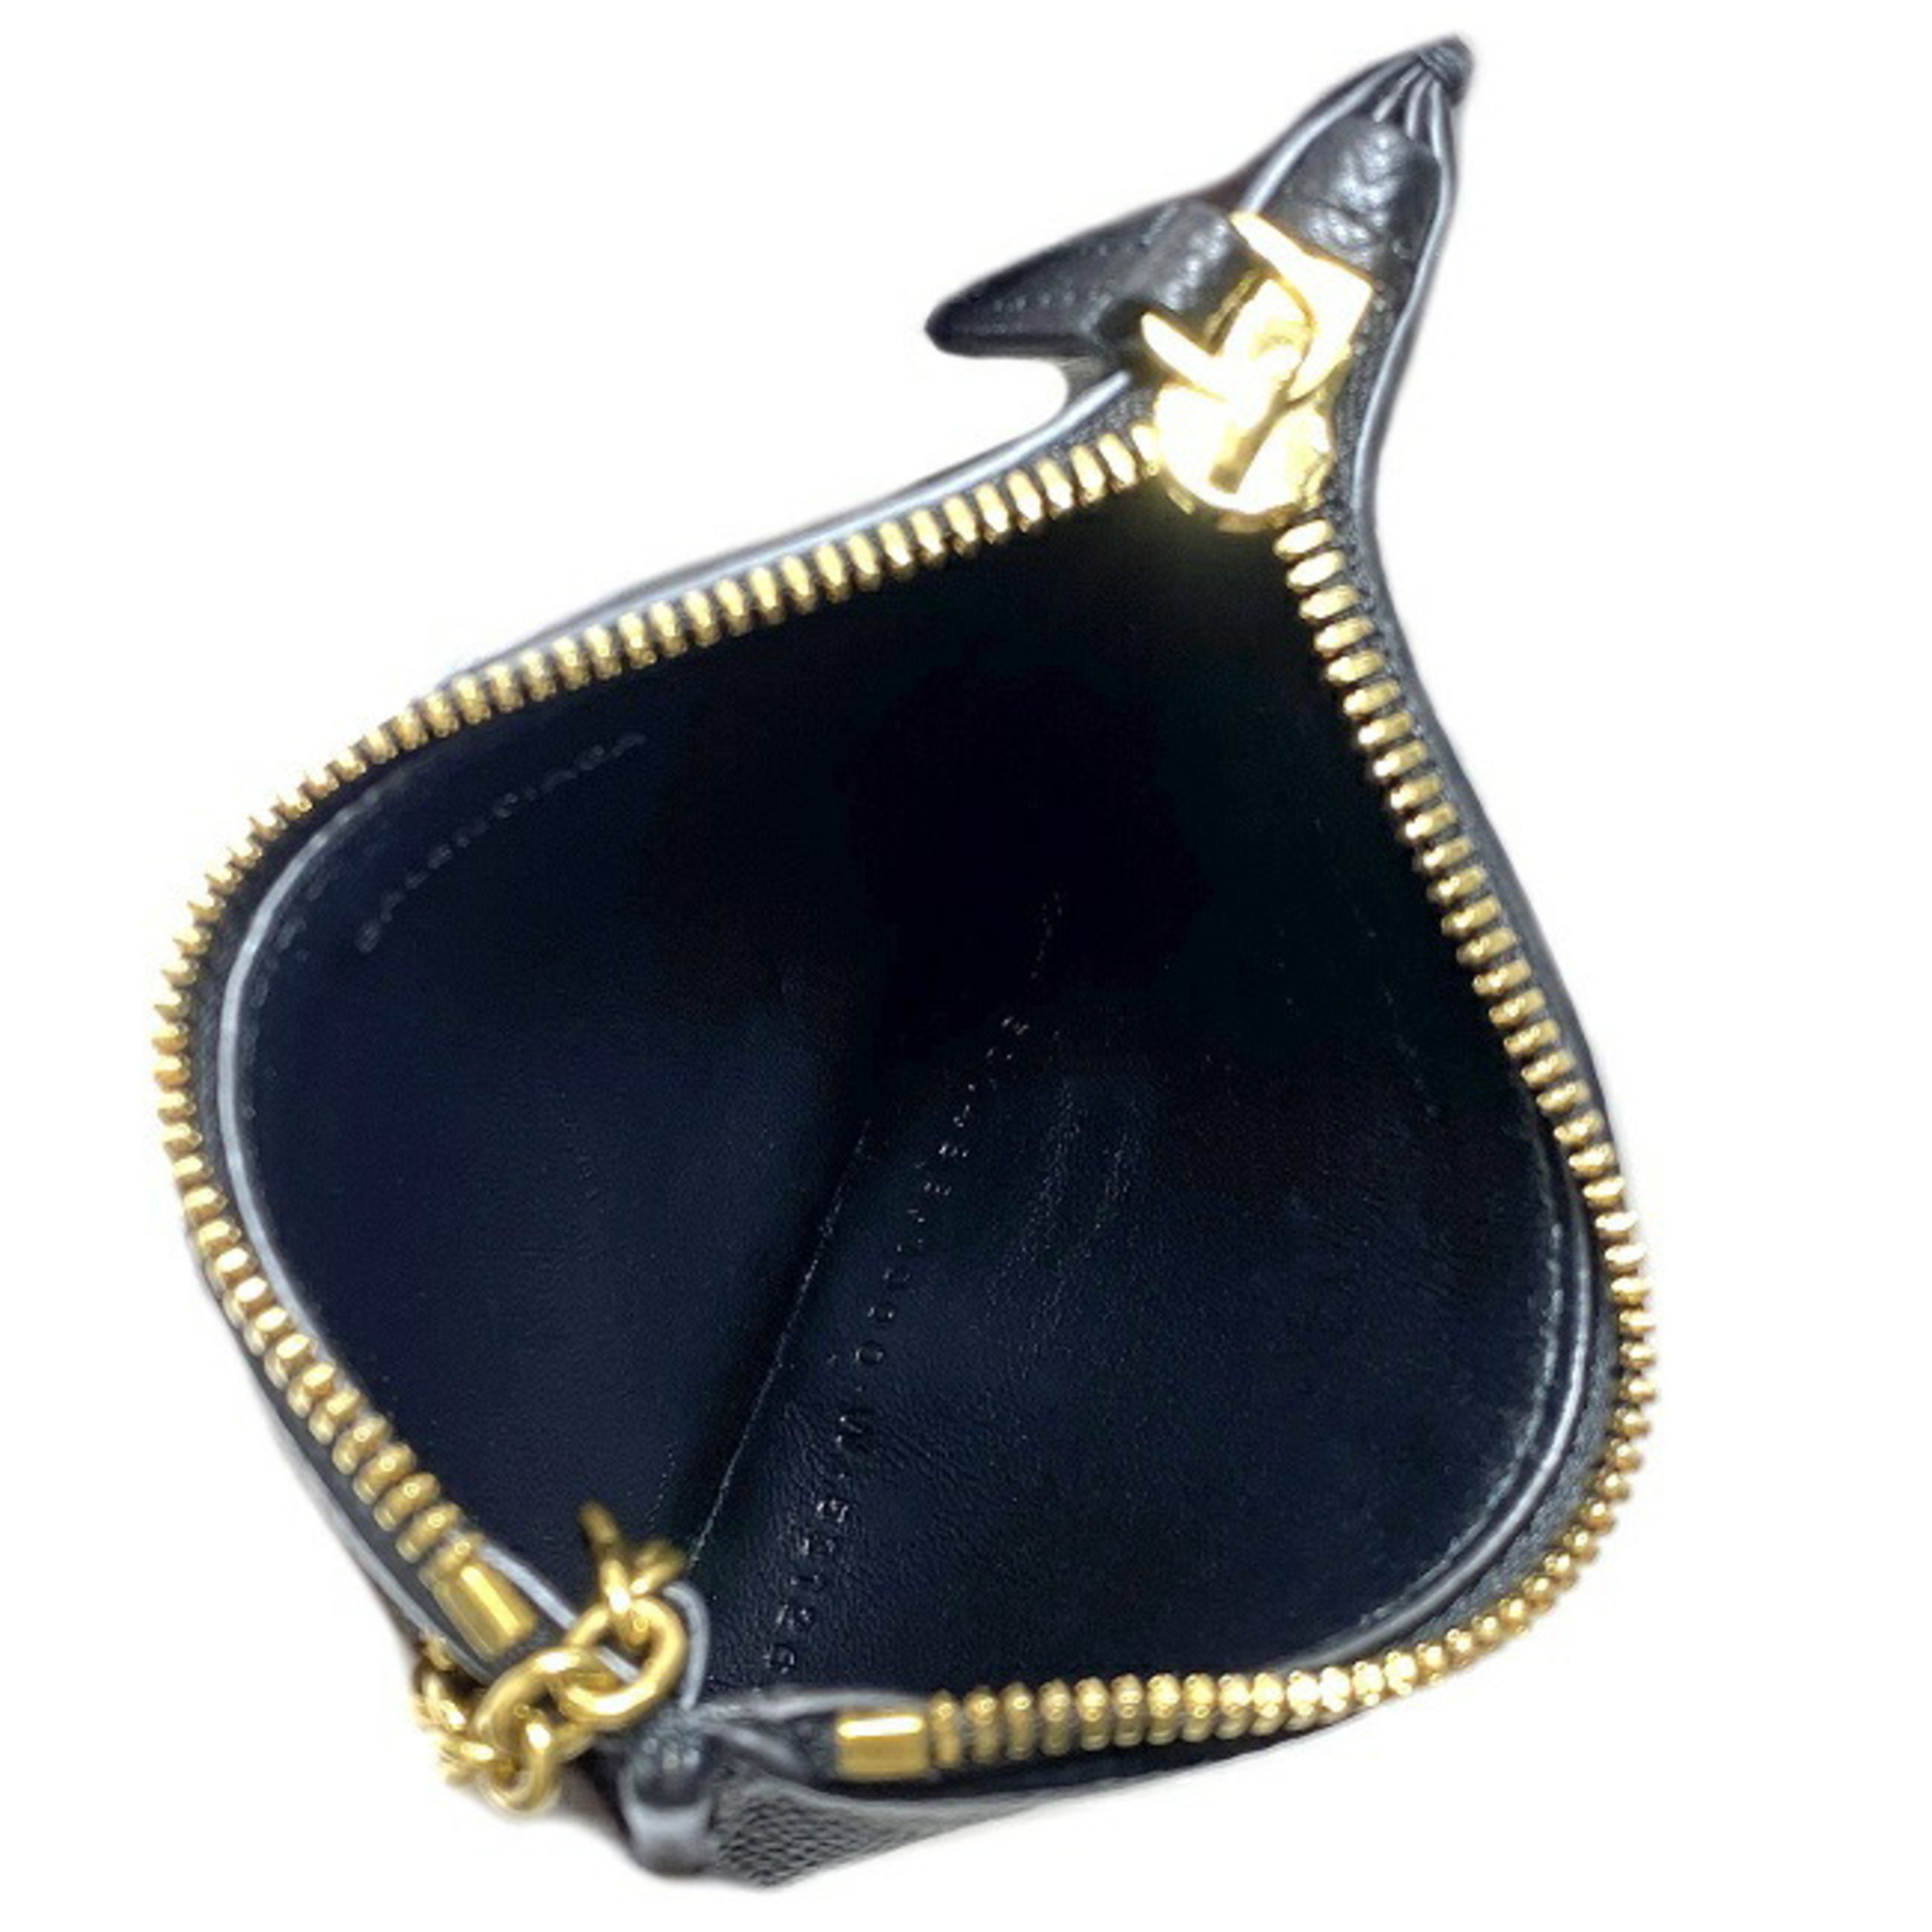 Balenciaga metal coin case black gold 601488 purse leather BALENCIAGA BB key ring holder ladies wallet